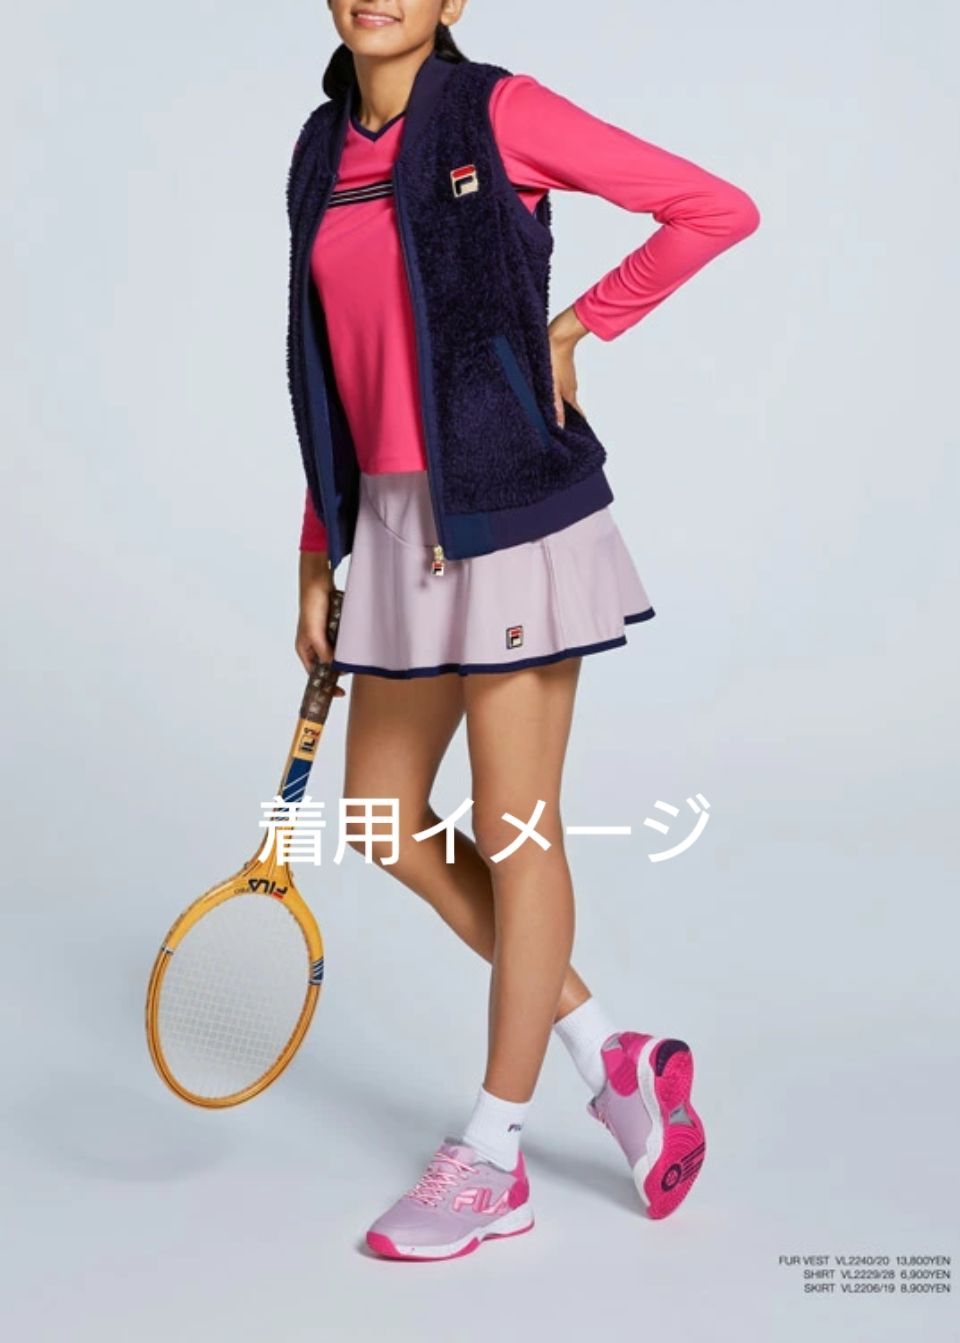 FILA フィラ テニス スコート Mサイズ 美品 くすみピンク - メルカリ